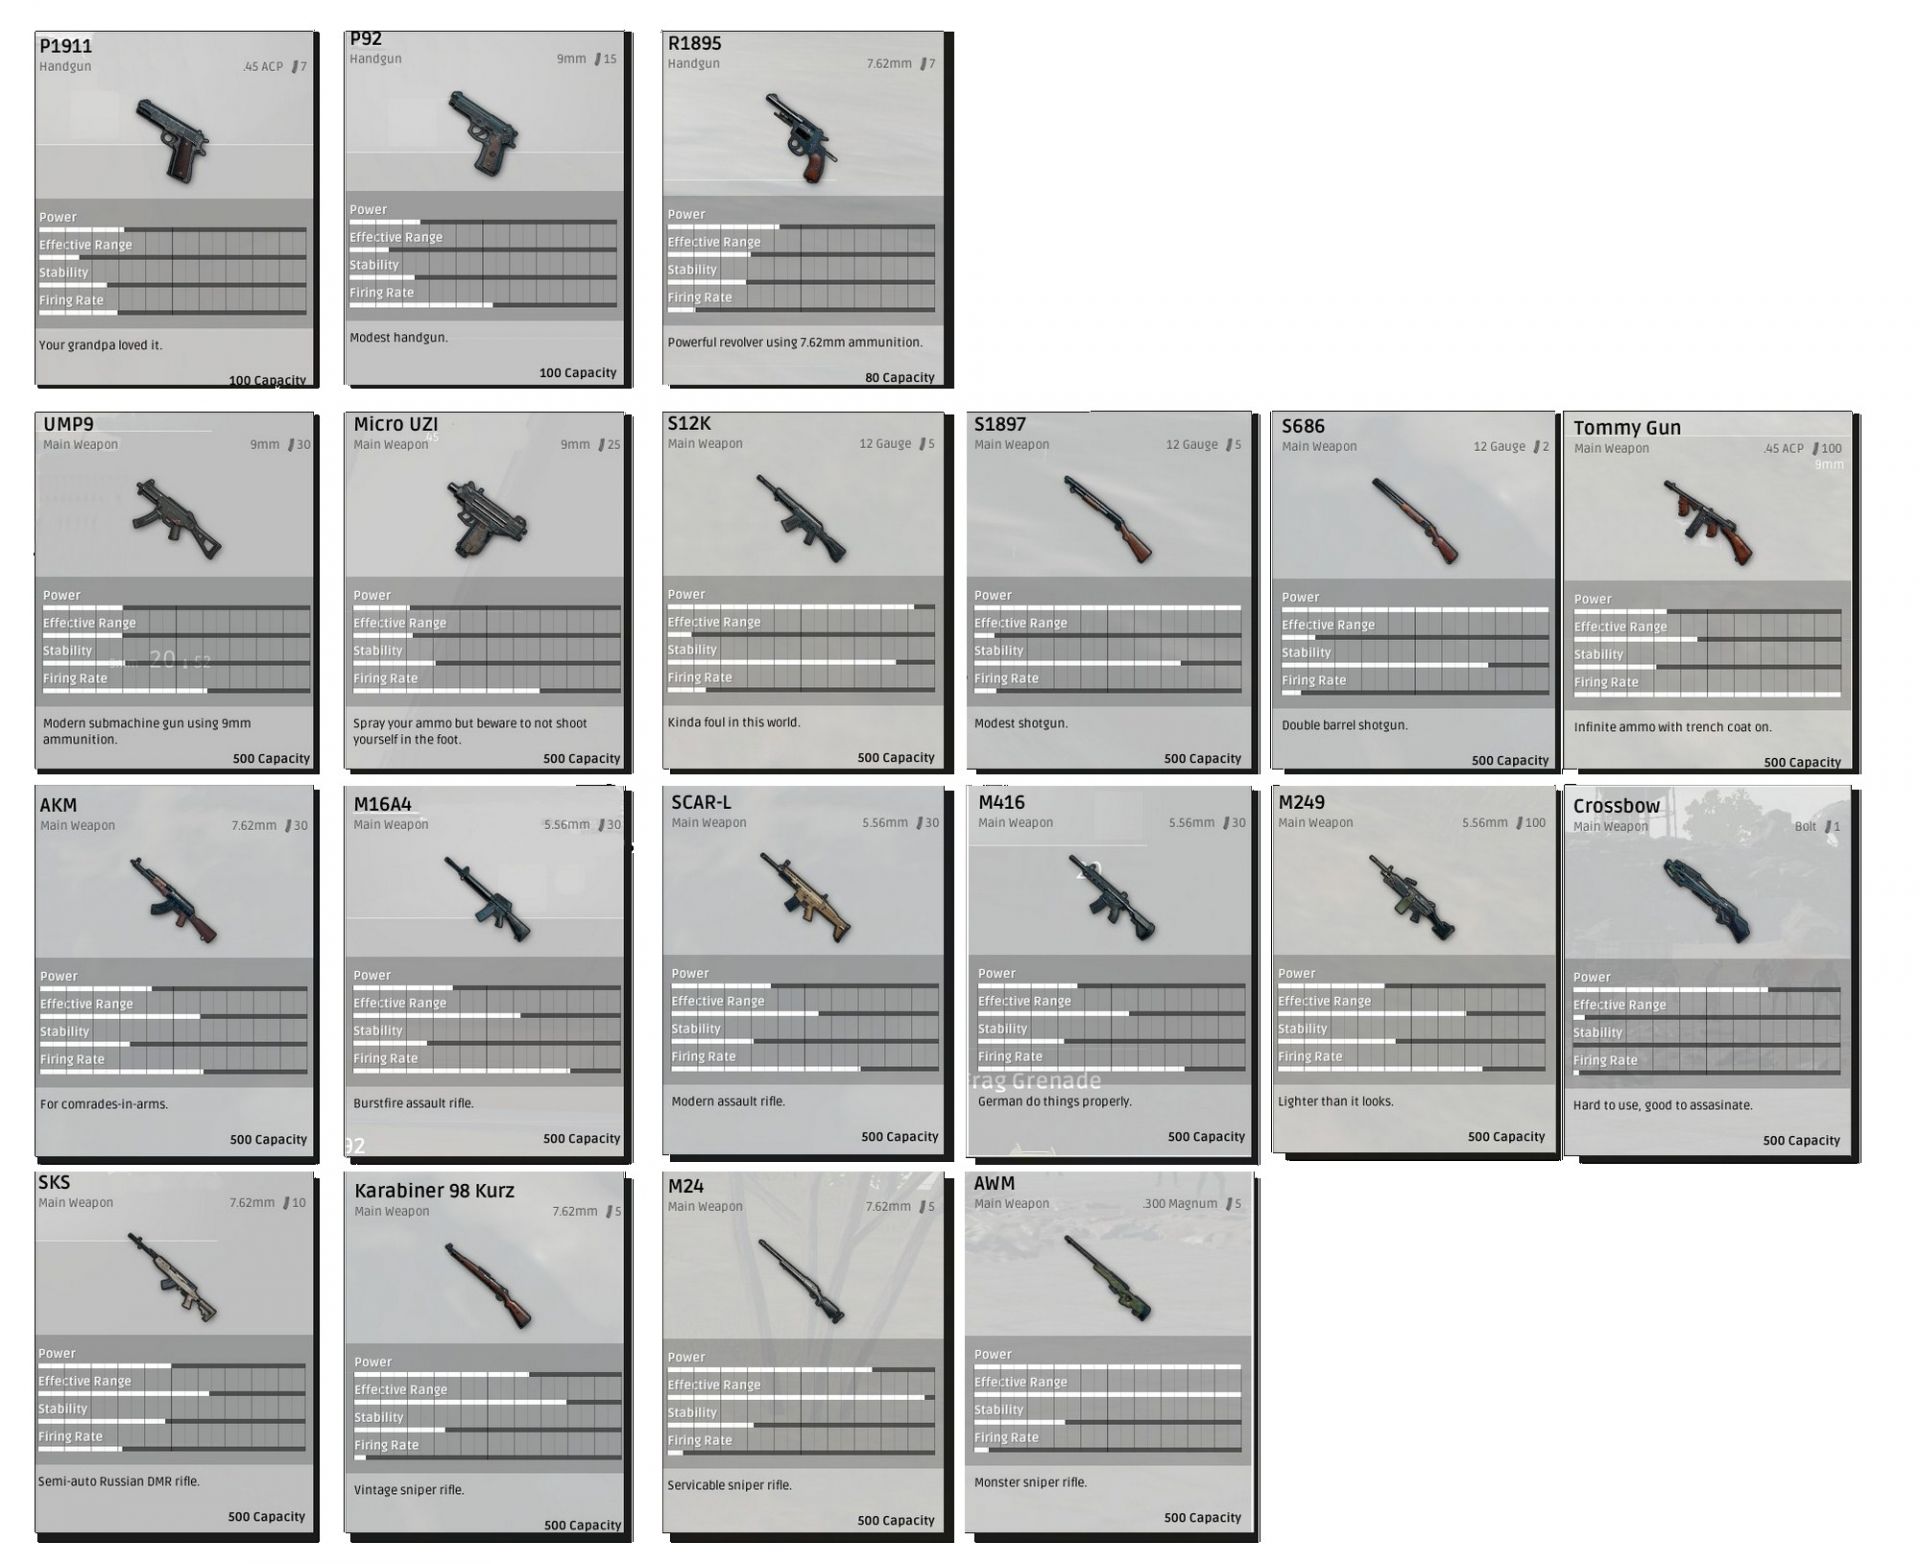 таблица характеристик оружия пубг фото 31